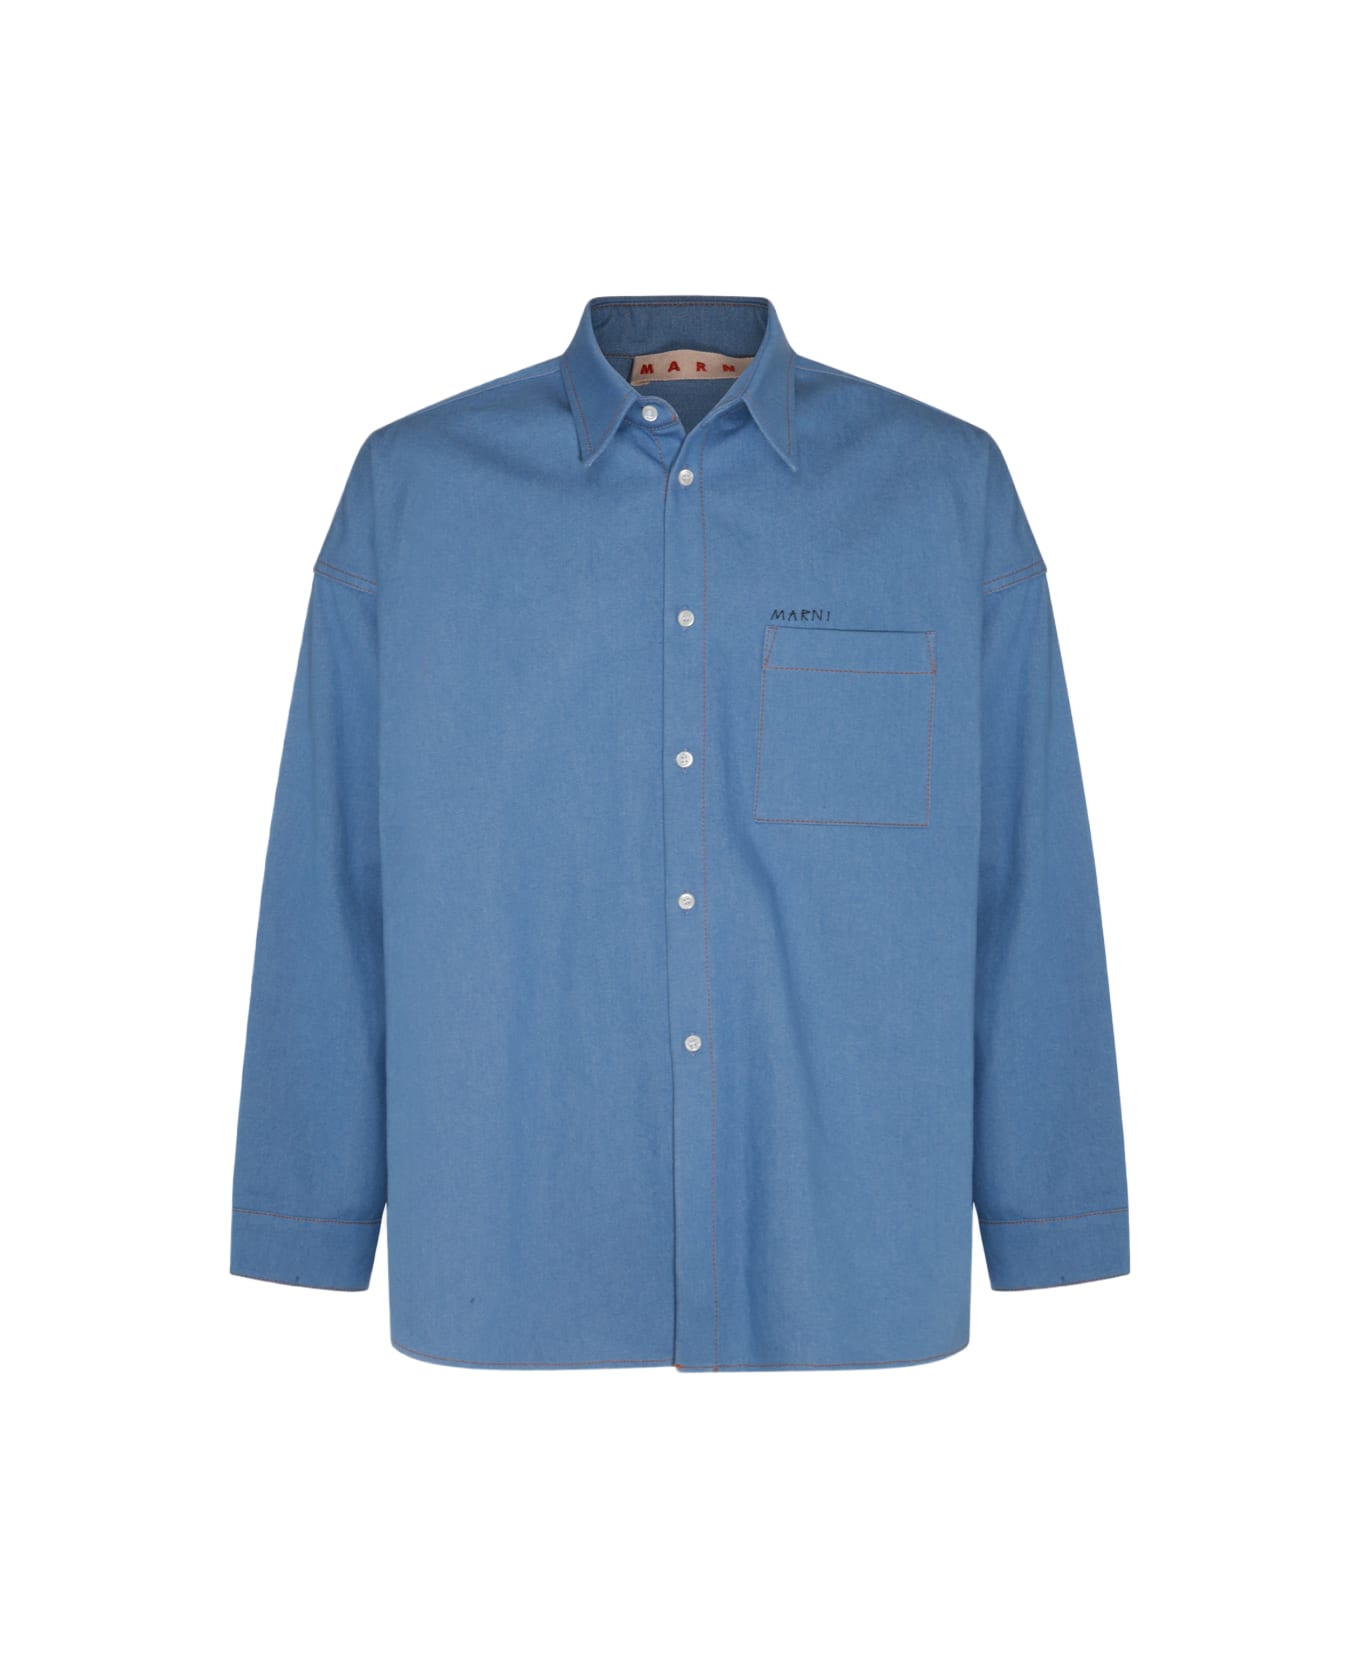 Marni Light Blue Cotton Shirt - AZURE シャツ